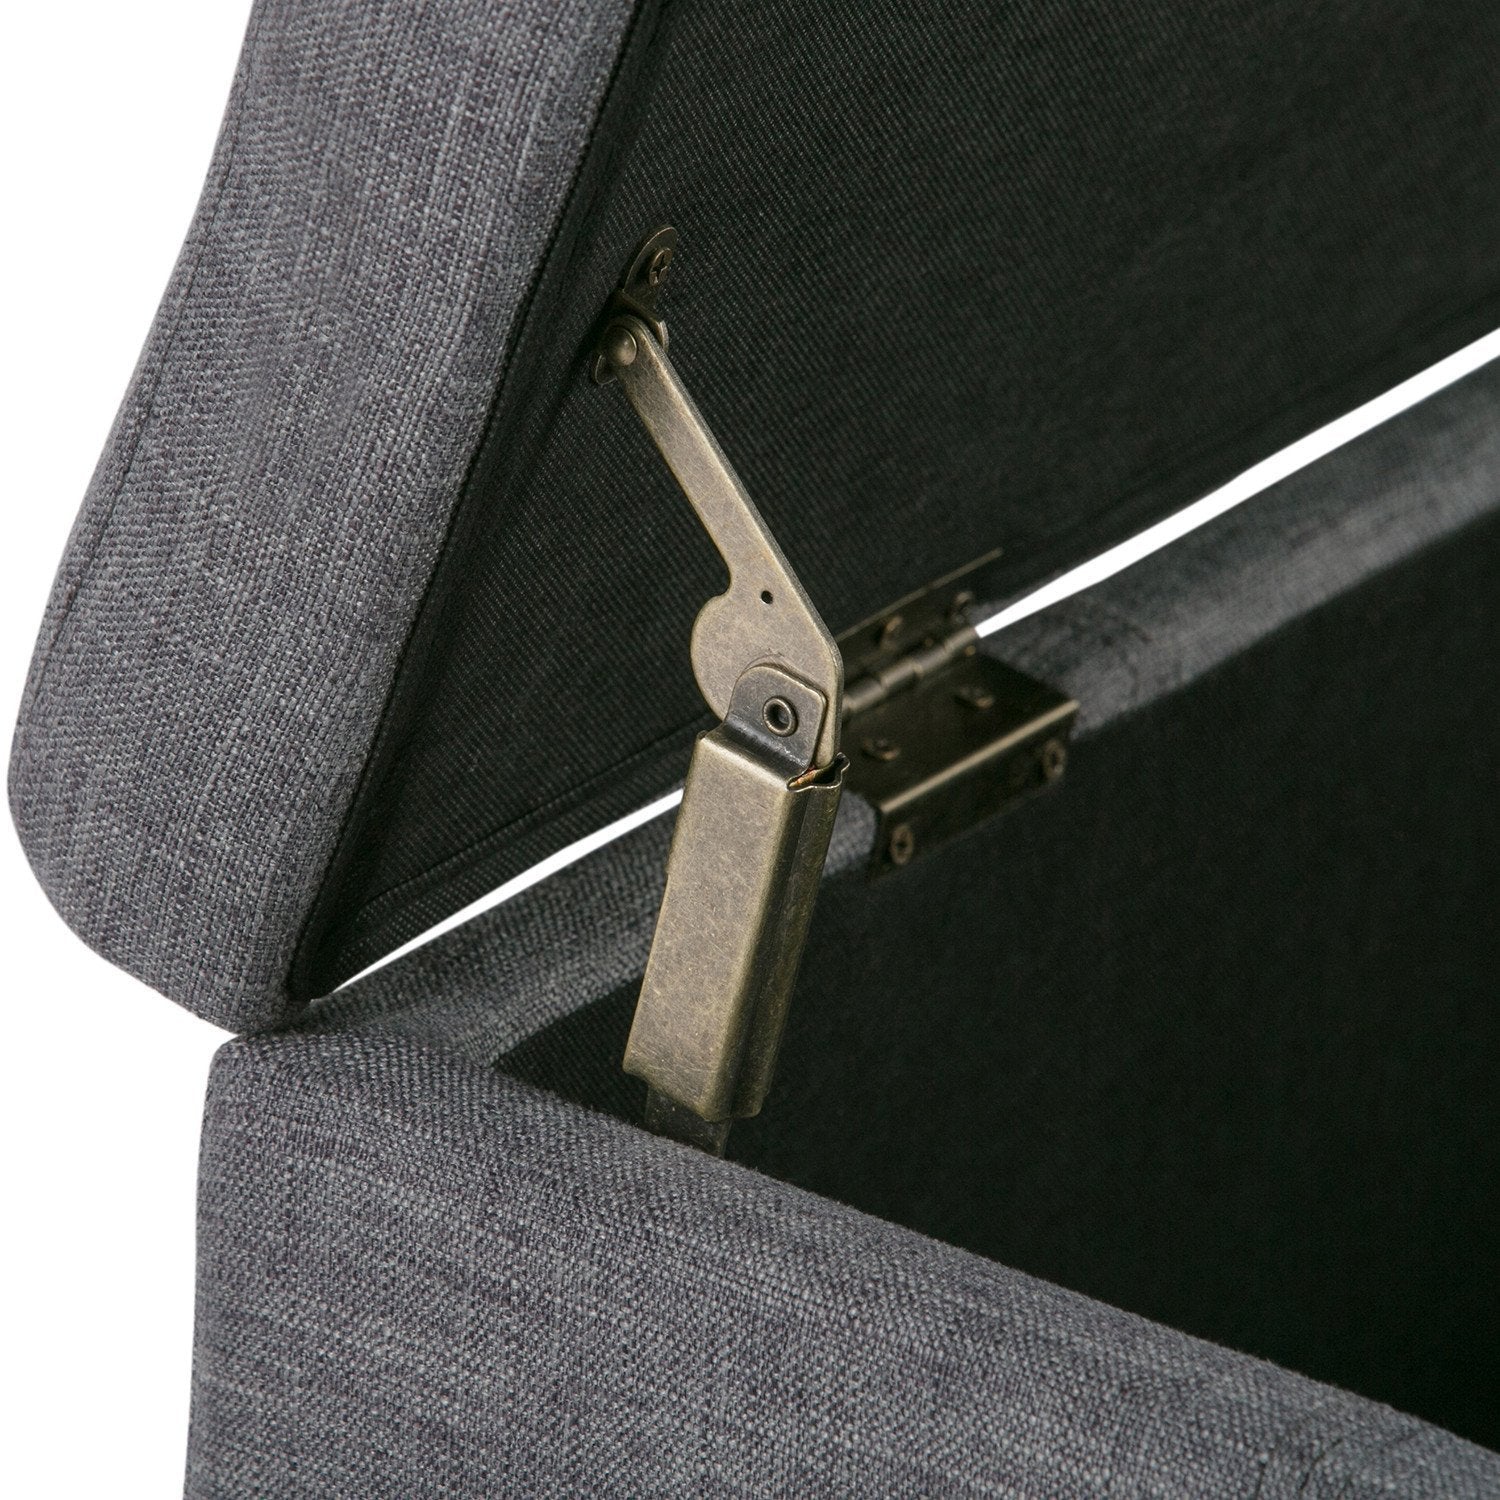 Slate Grey Linen Style Fabric | Kingsley Bonded Leather Storage Ottoman